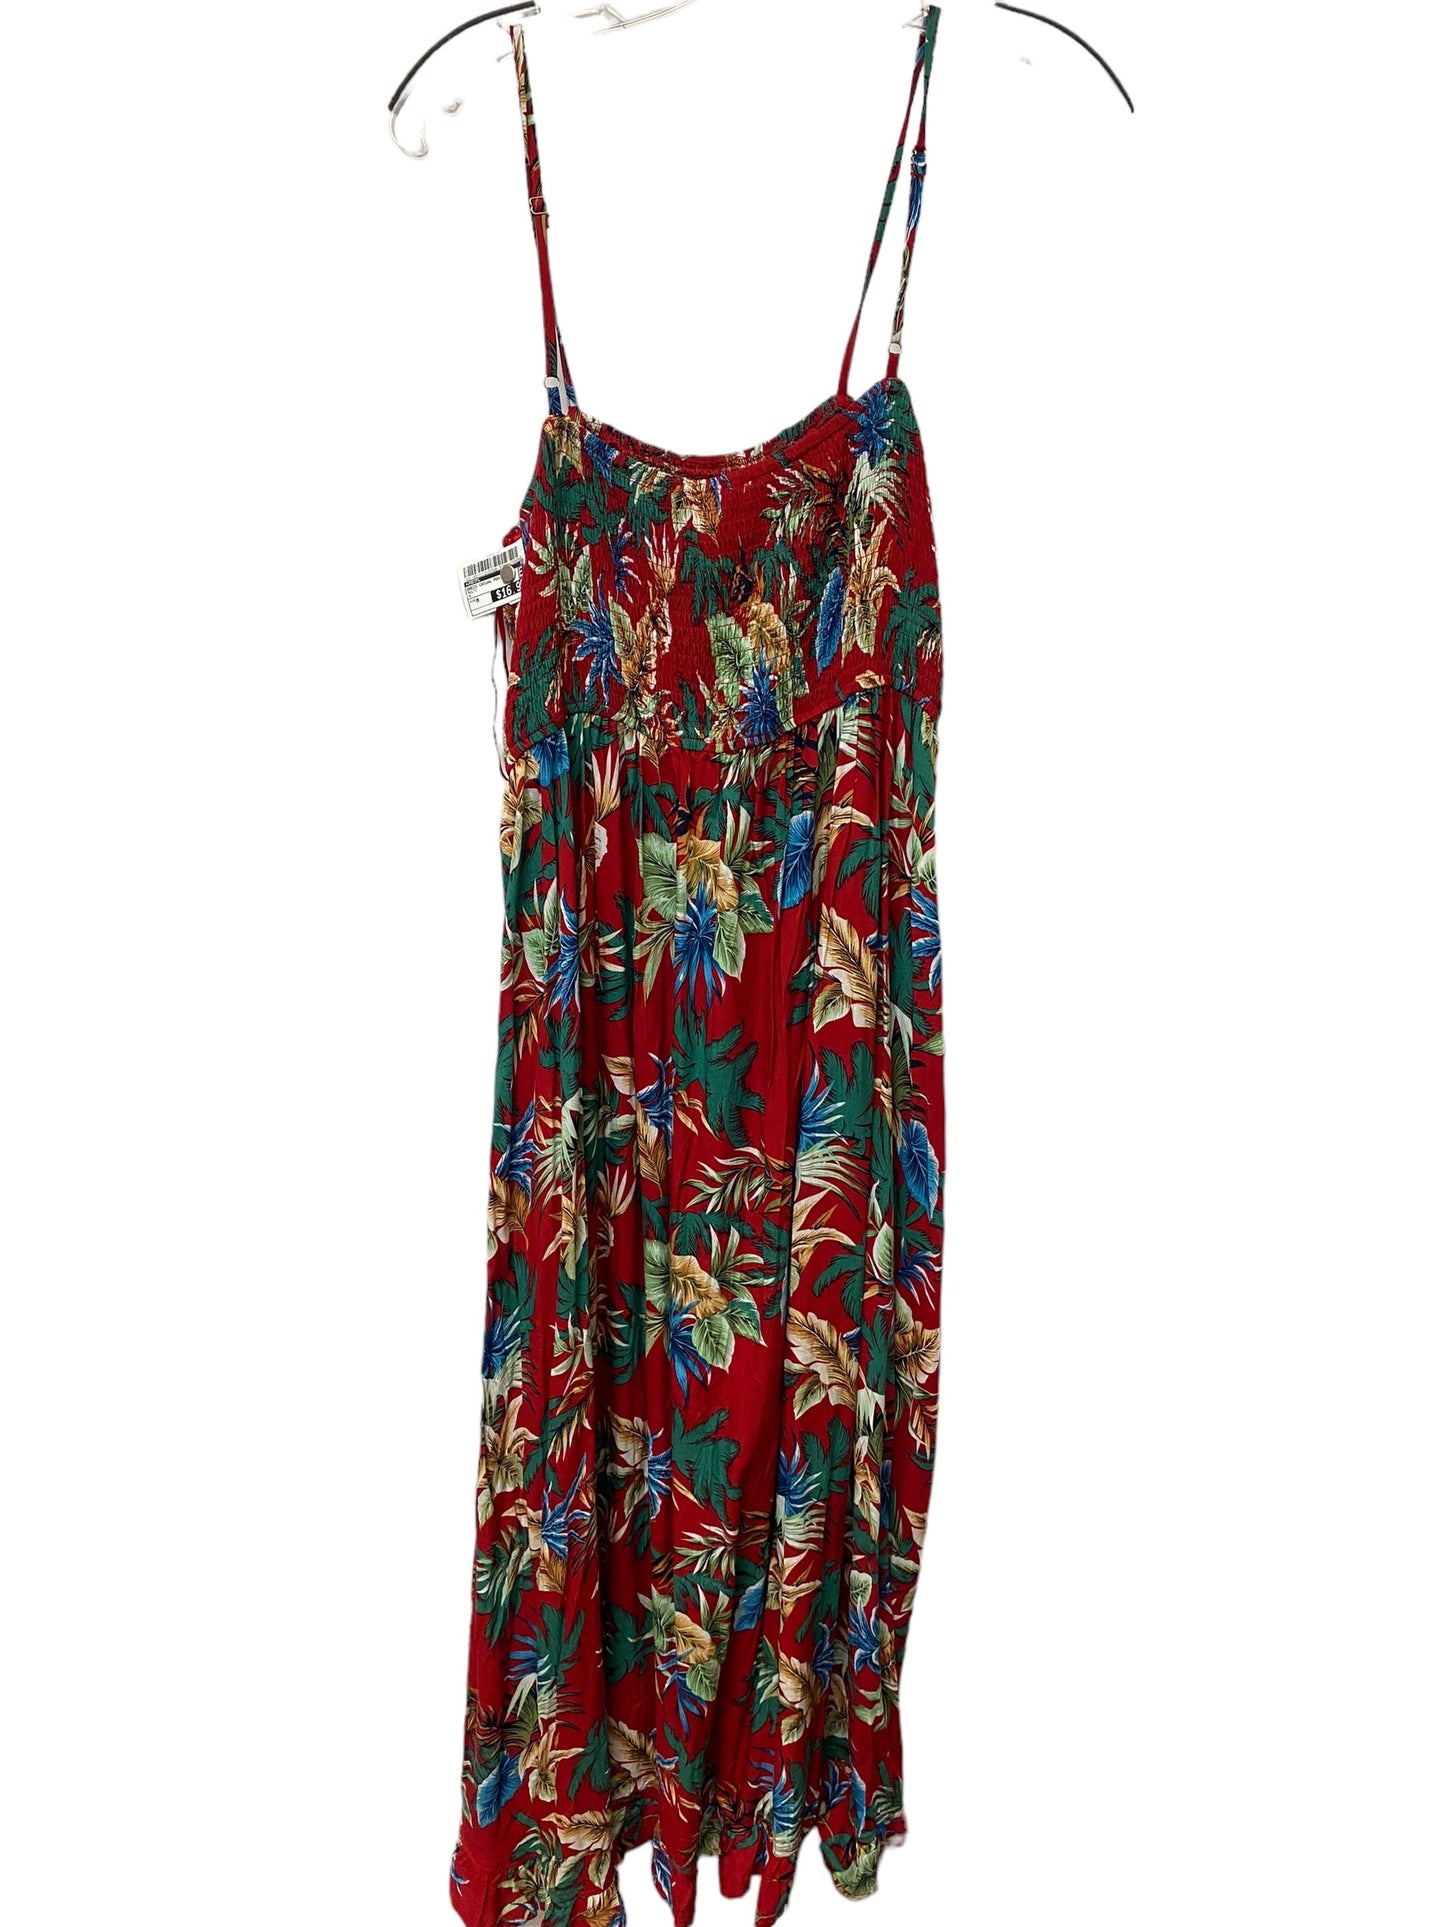 Dress Casual Maxi By Jodifl  Size: M